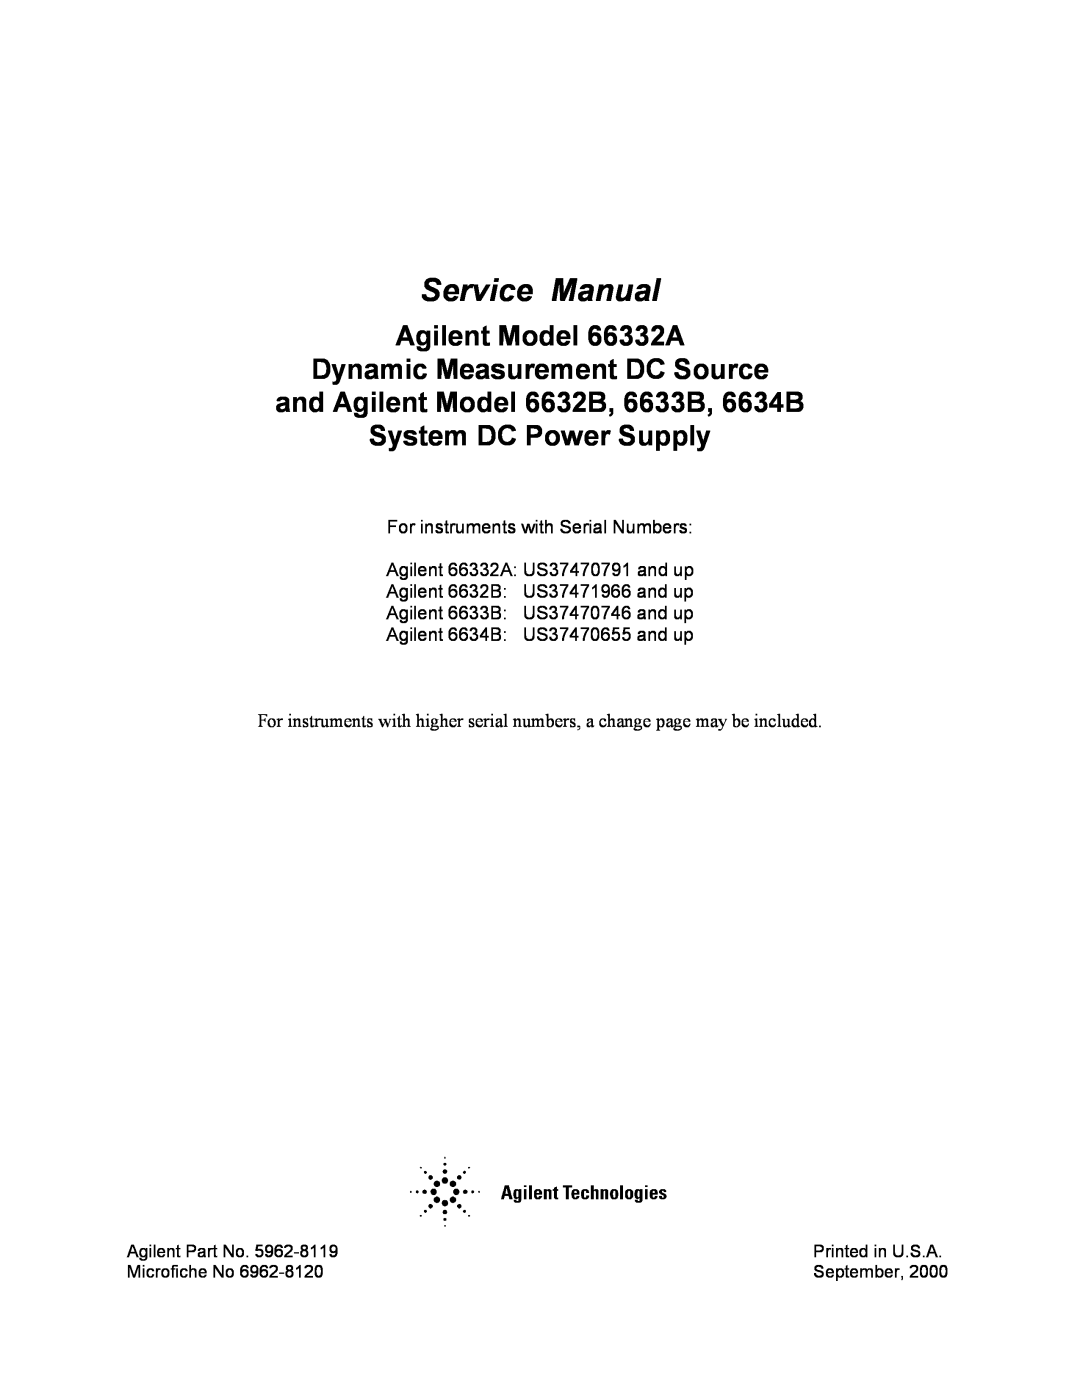 Agilent Technologies 6634B service manual Agilent Model 66332A, Dynamic Measurement DC Source, System DC Power Supply 